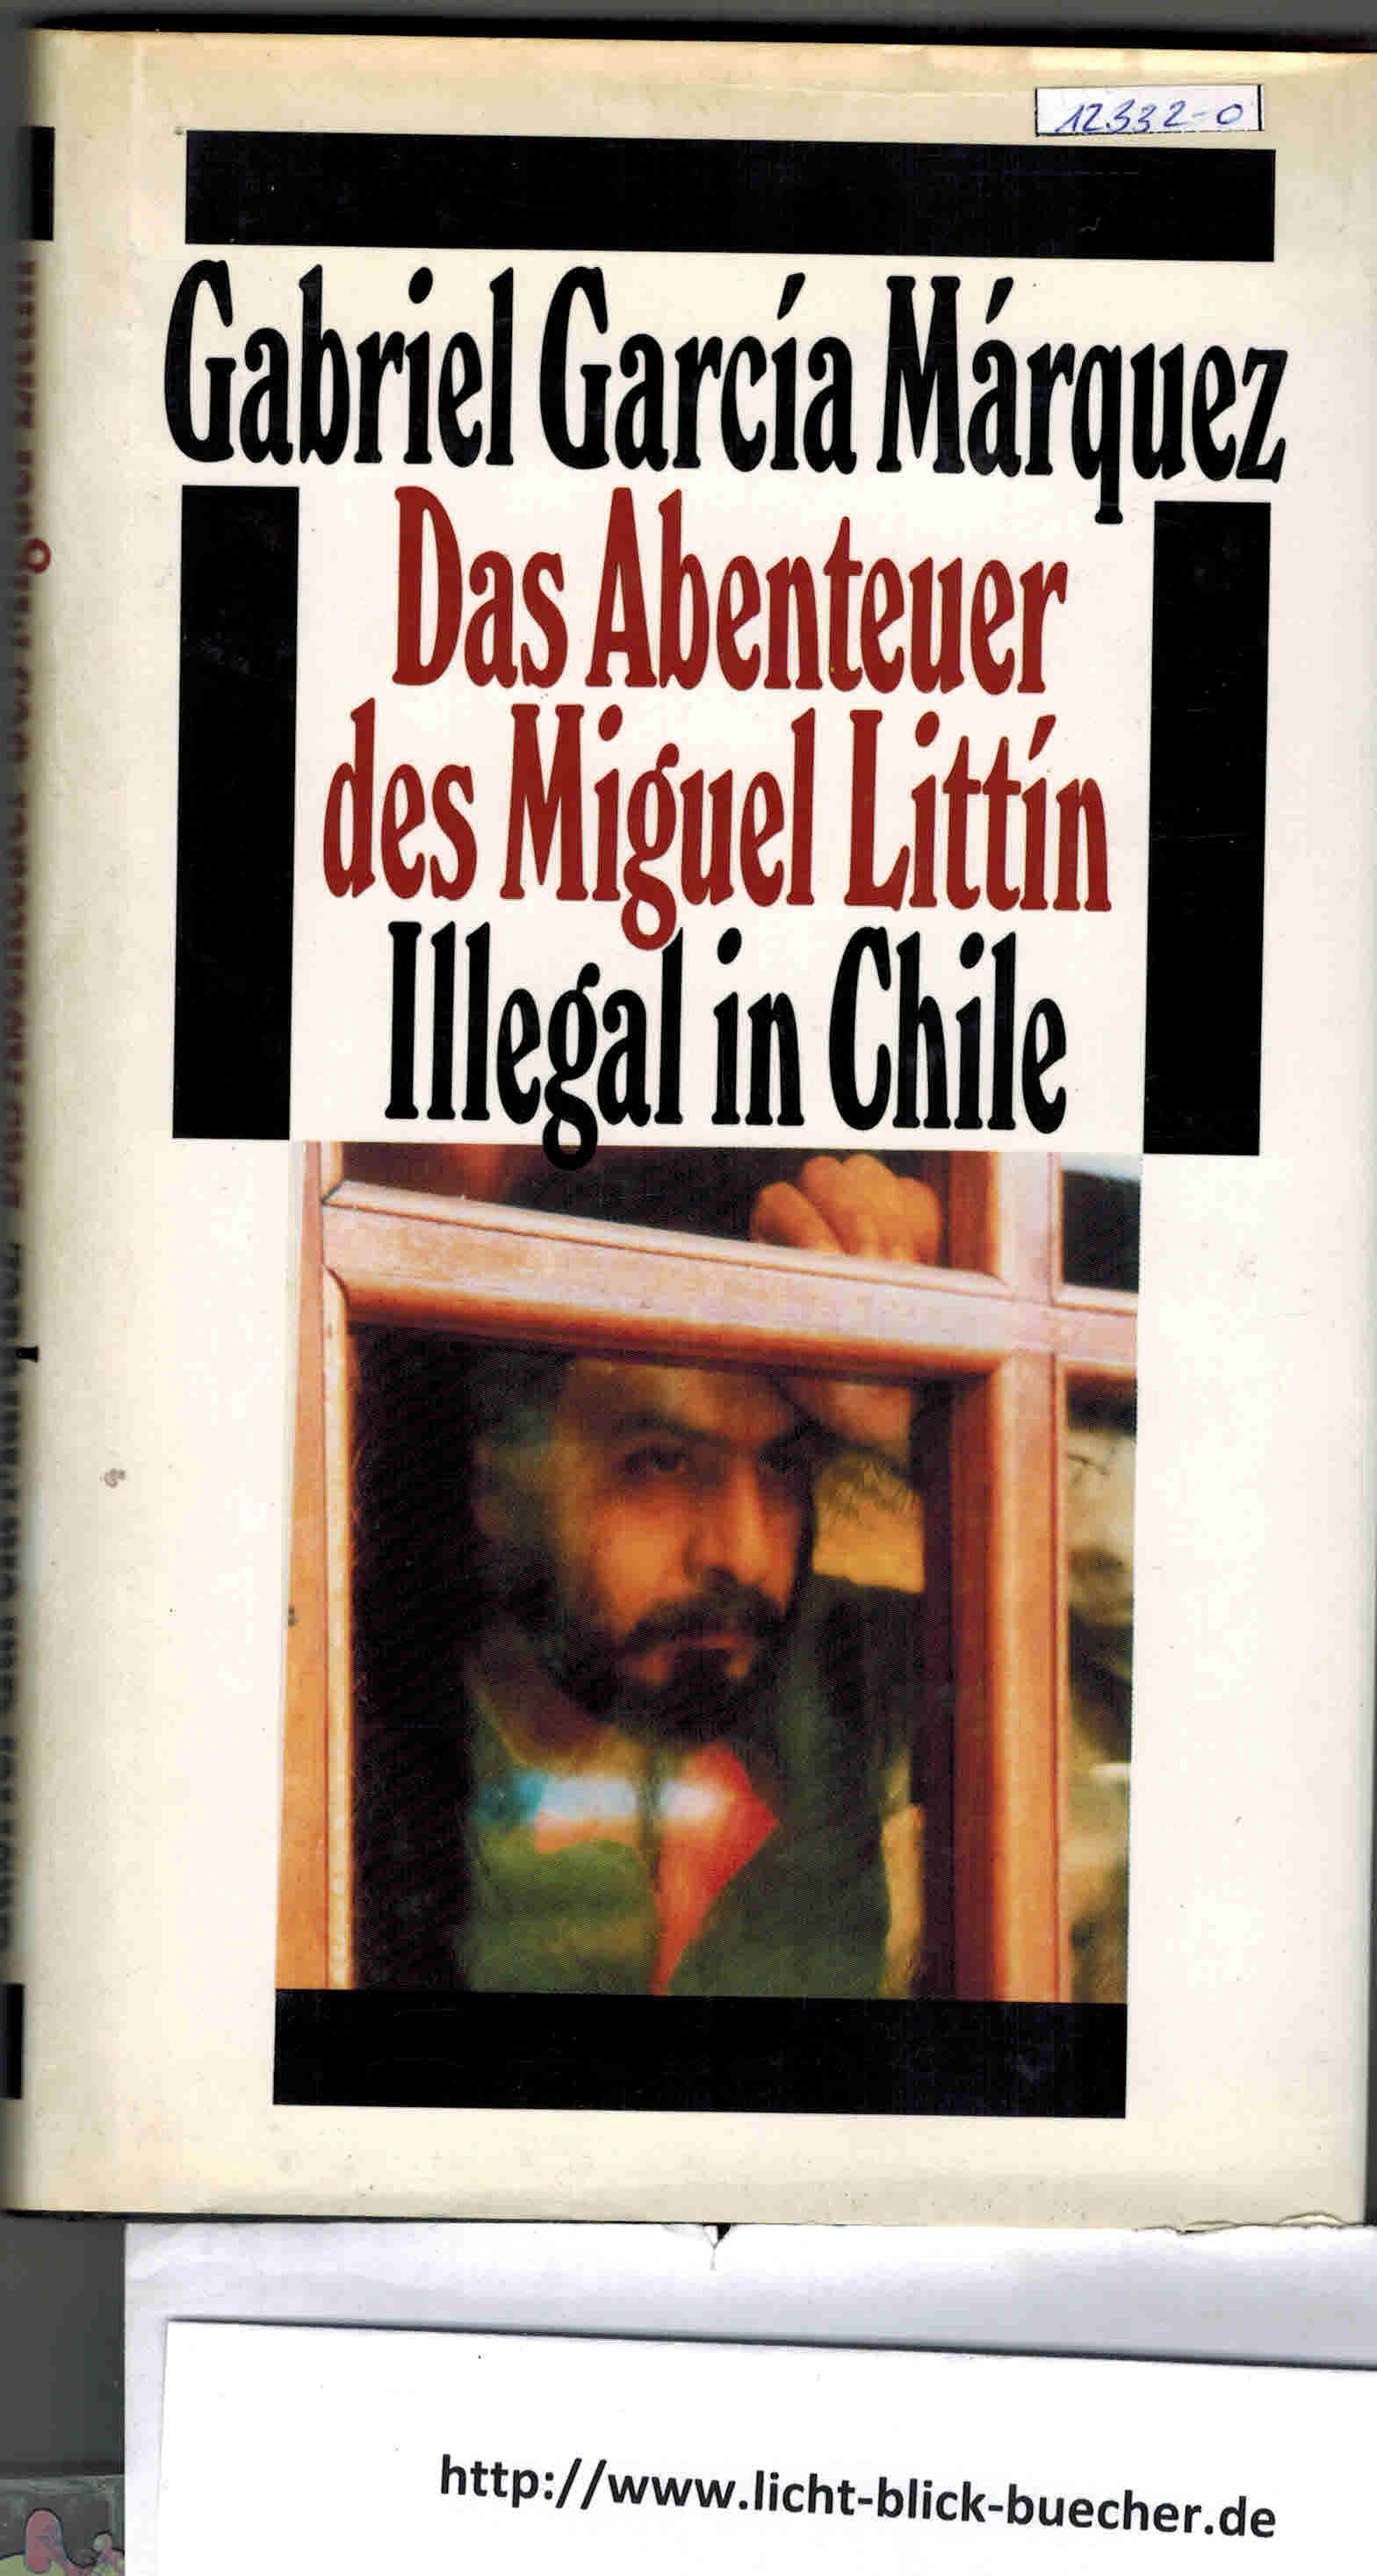 Die Abenteuer des Miguel Littin -Illegal in Chile...Gabriel Gracia Marquez